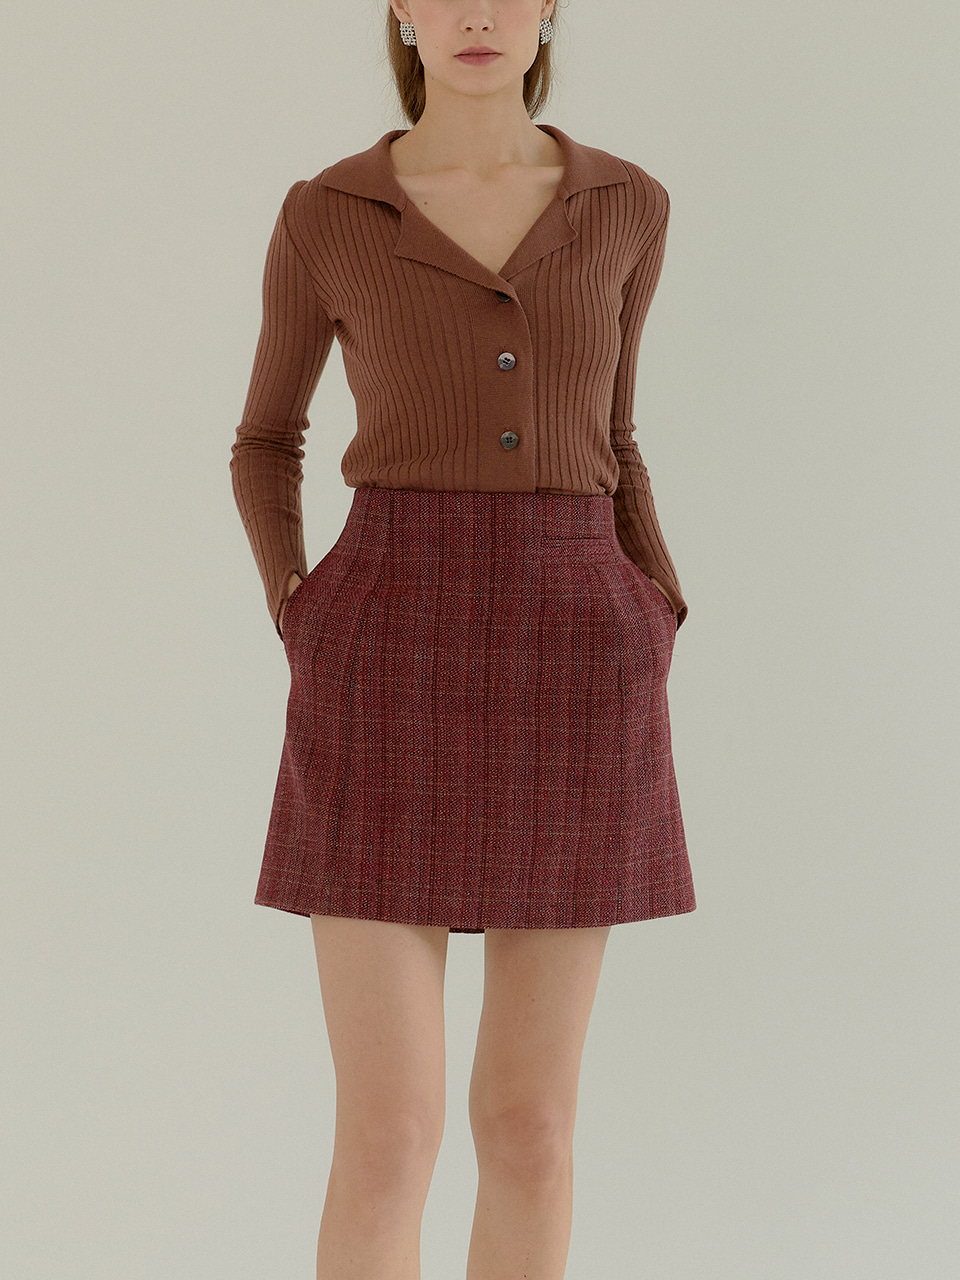 JEANNE_High Waisted Jacquard Mini Skirt_BRICK RED